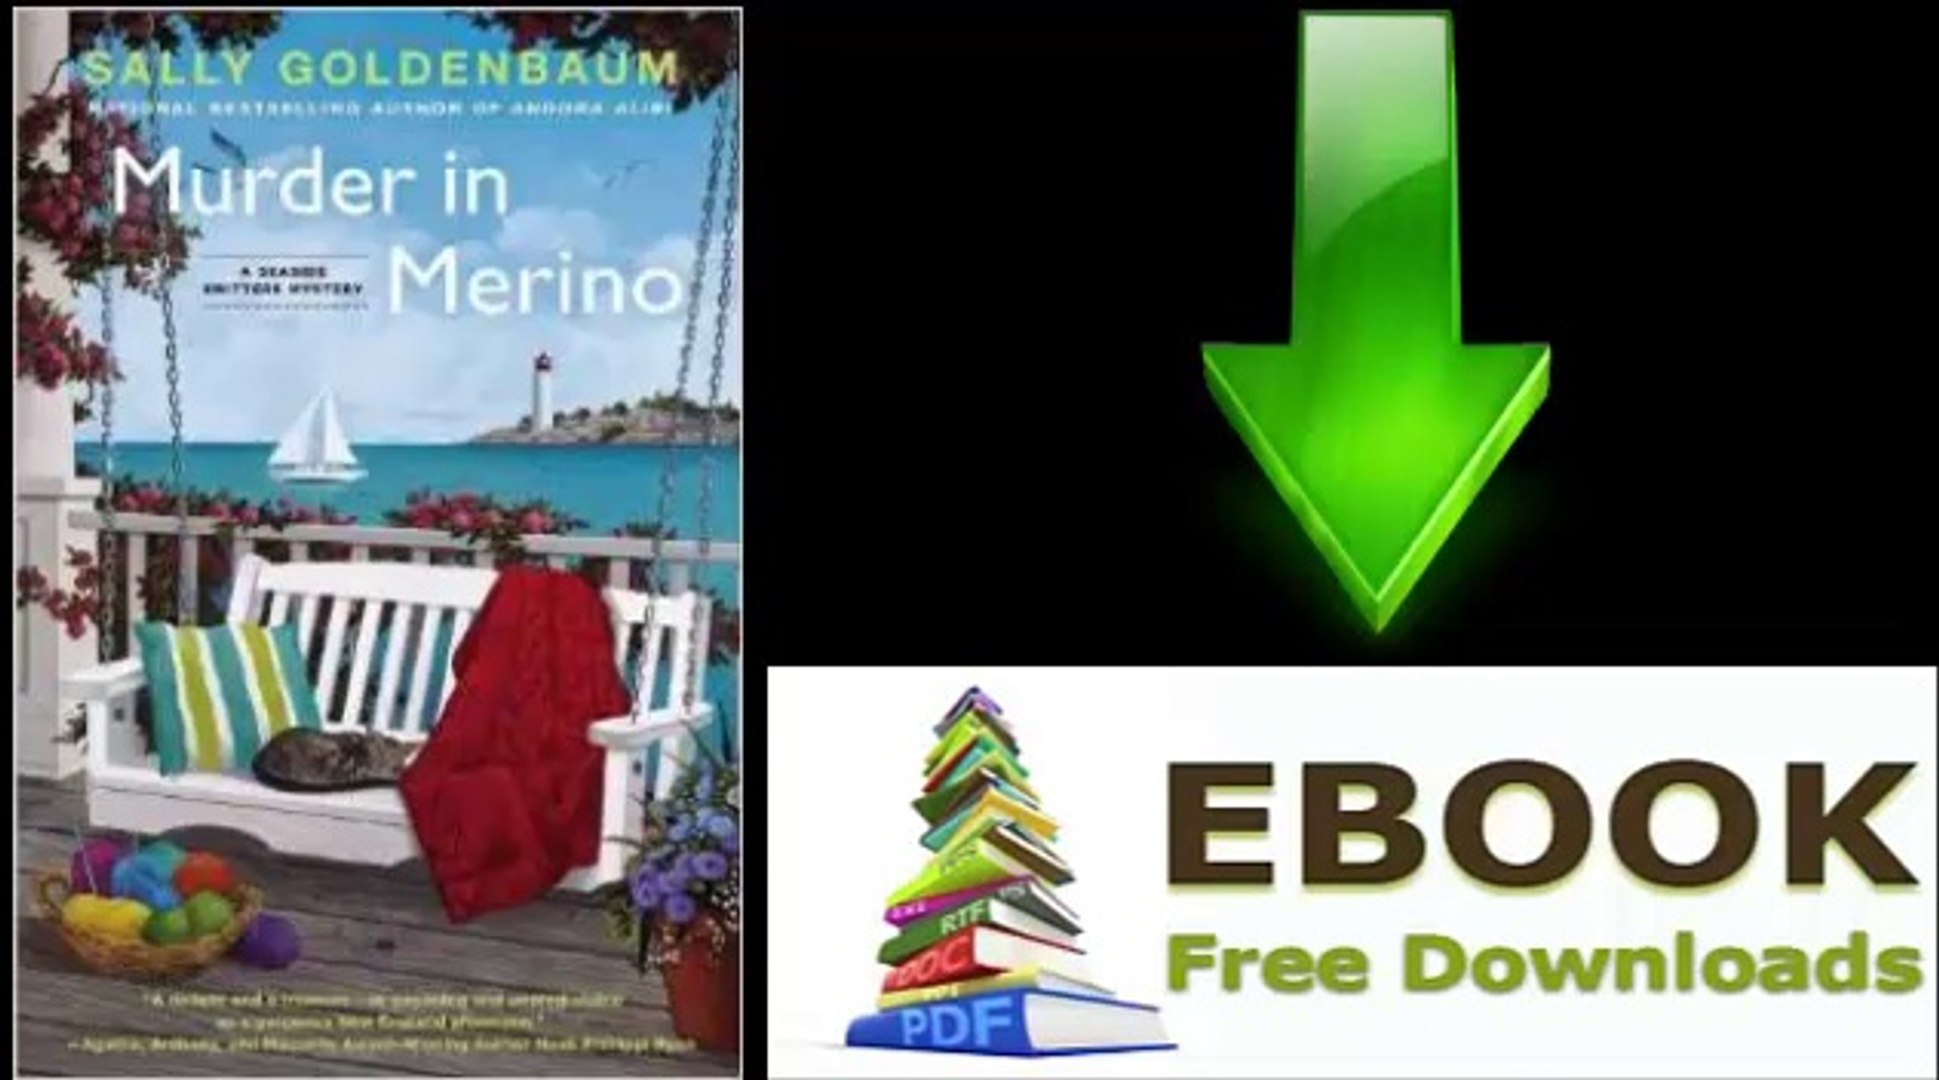 ⁣[FREE eBook] Murder in Merino: A Seaside Knitters Mystery by Sally Goldenbaum [PDF/ePUB]